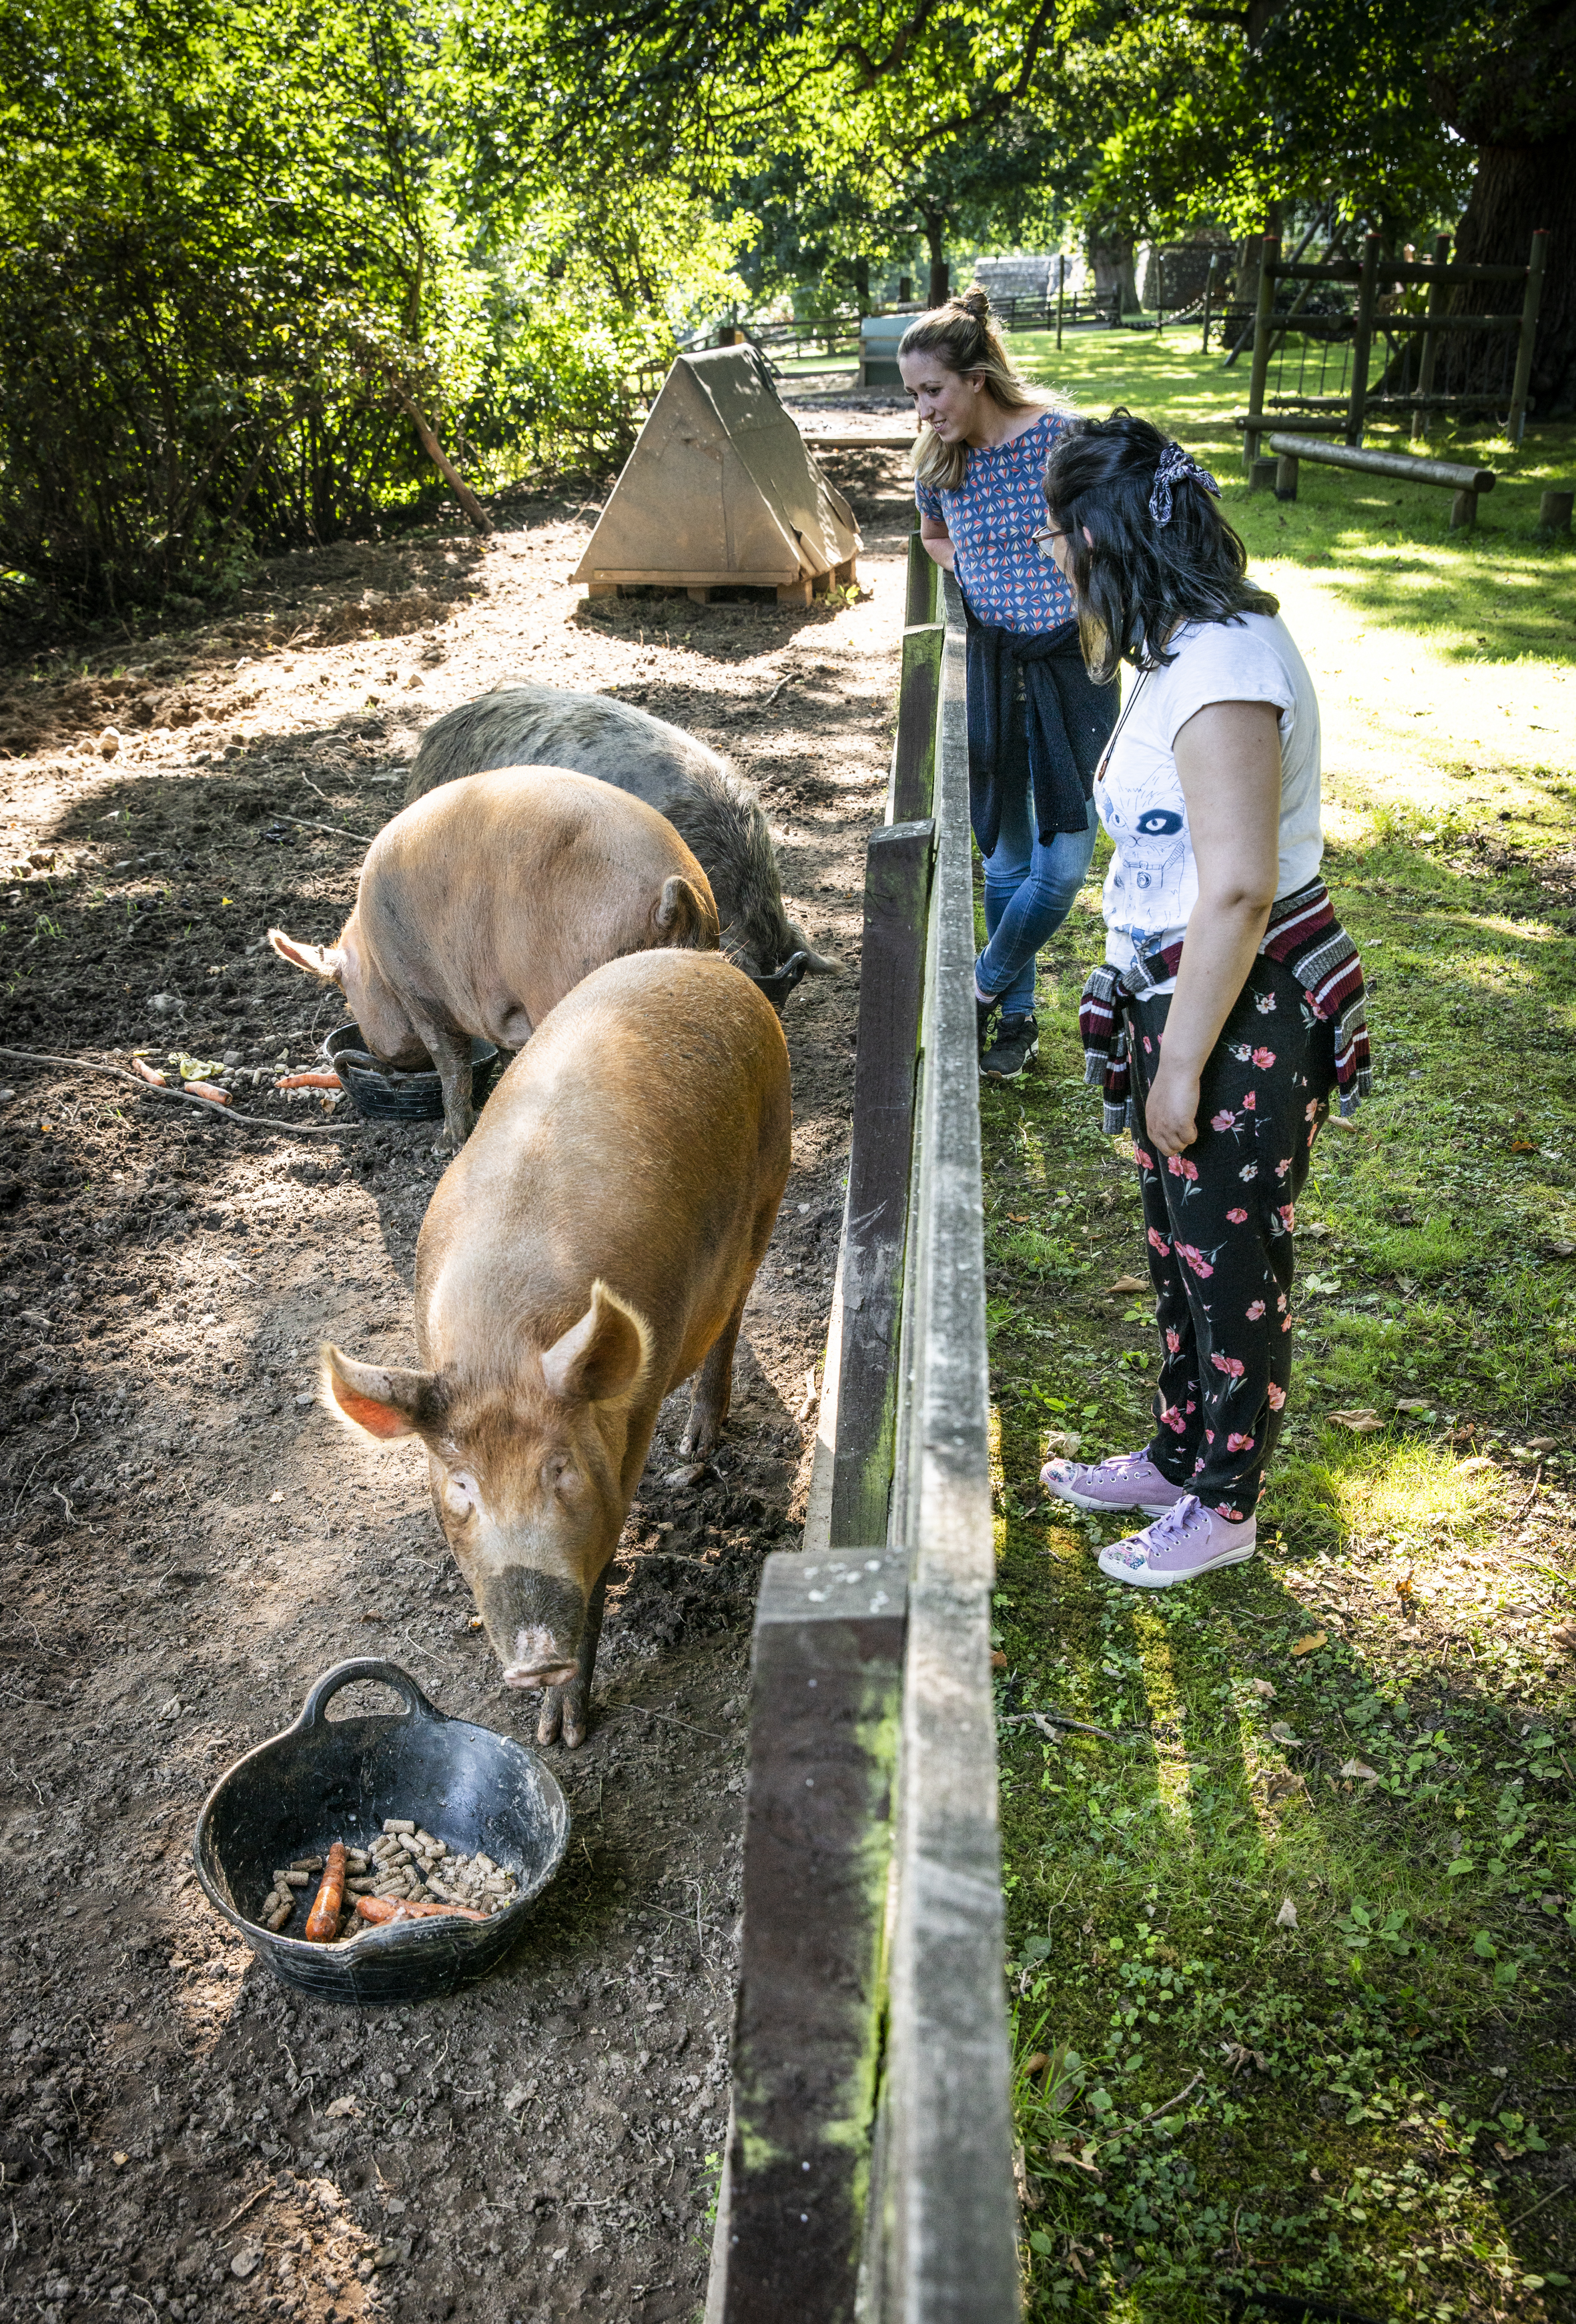 Camphill-pigs feeding